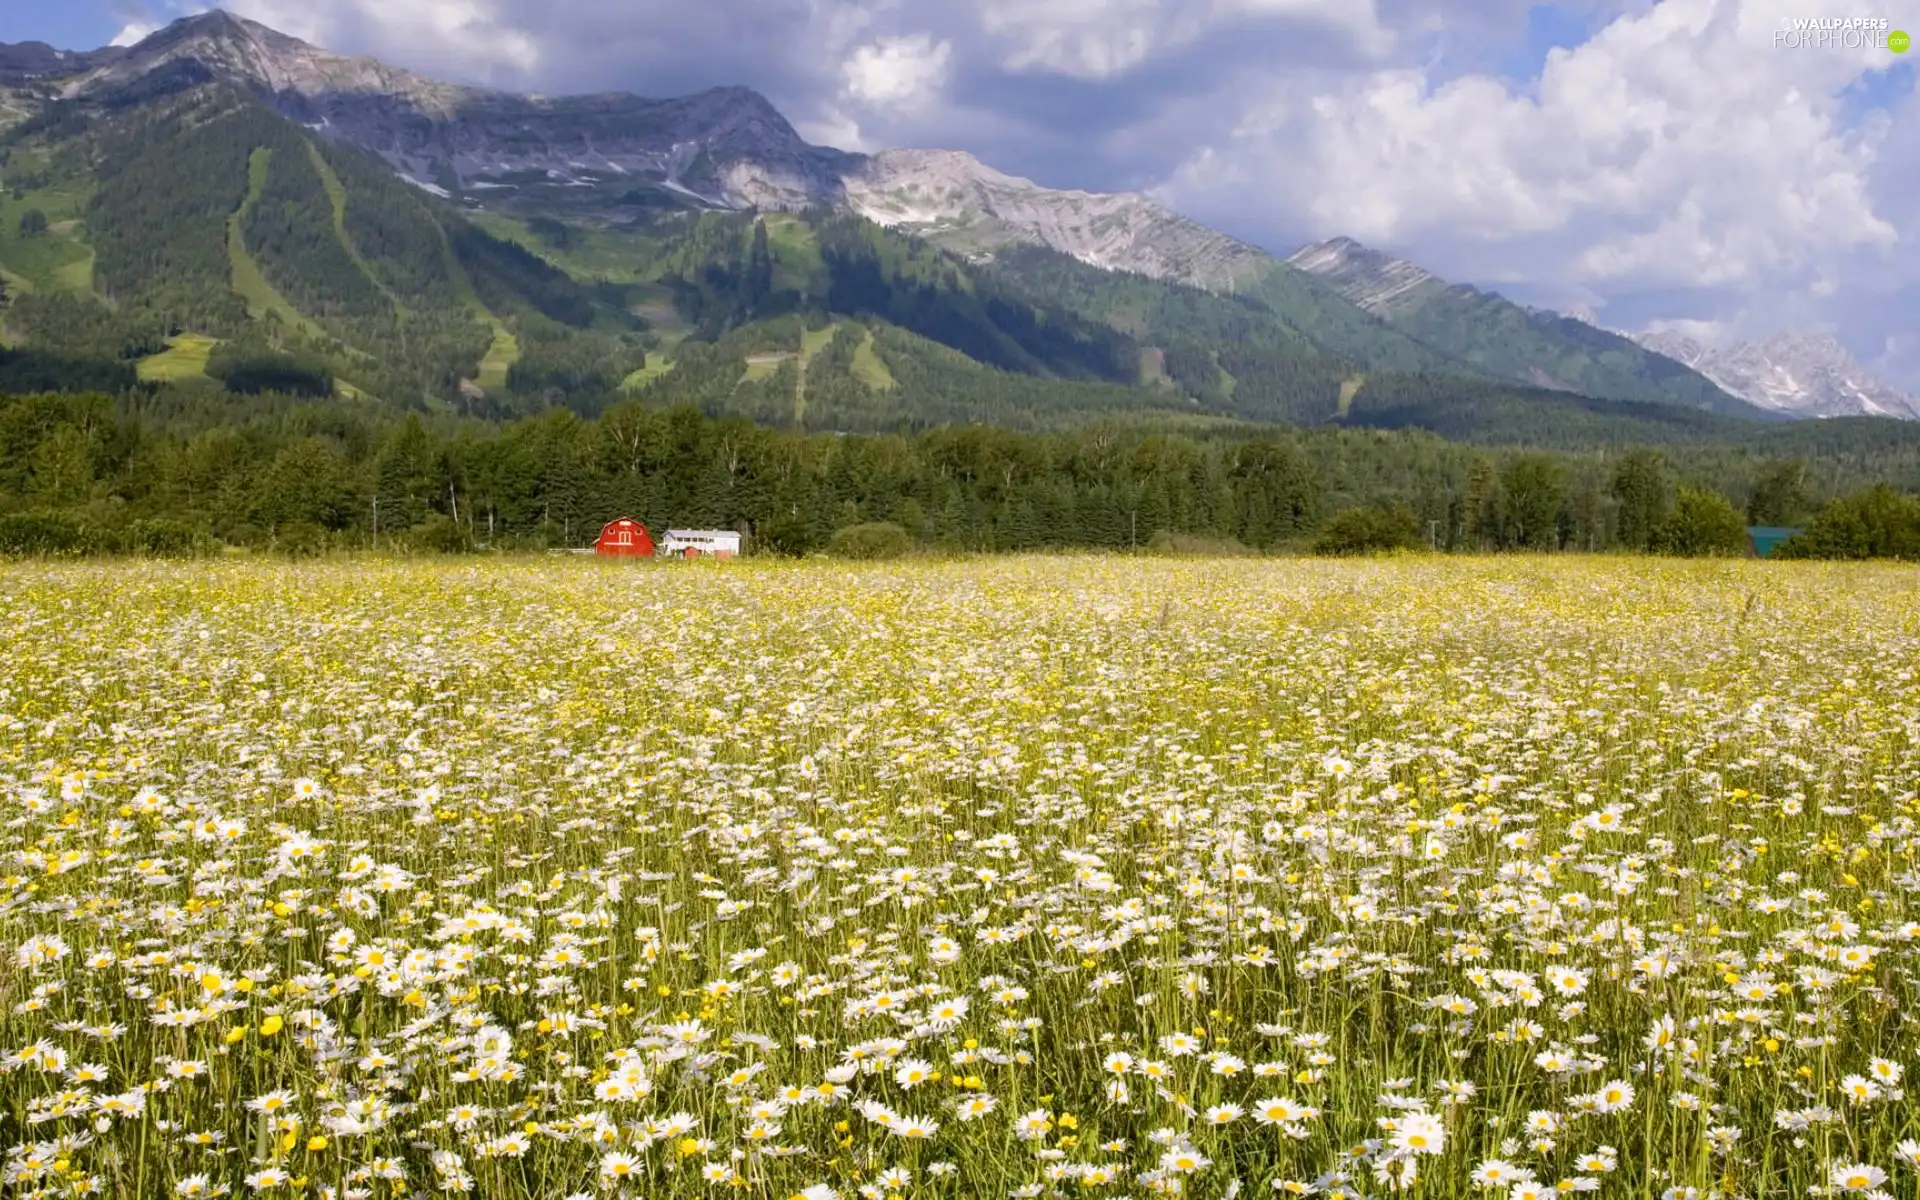 Field, Mountains, British Columbia, Daisies